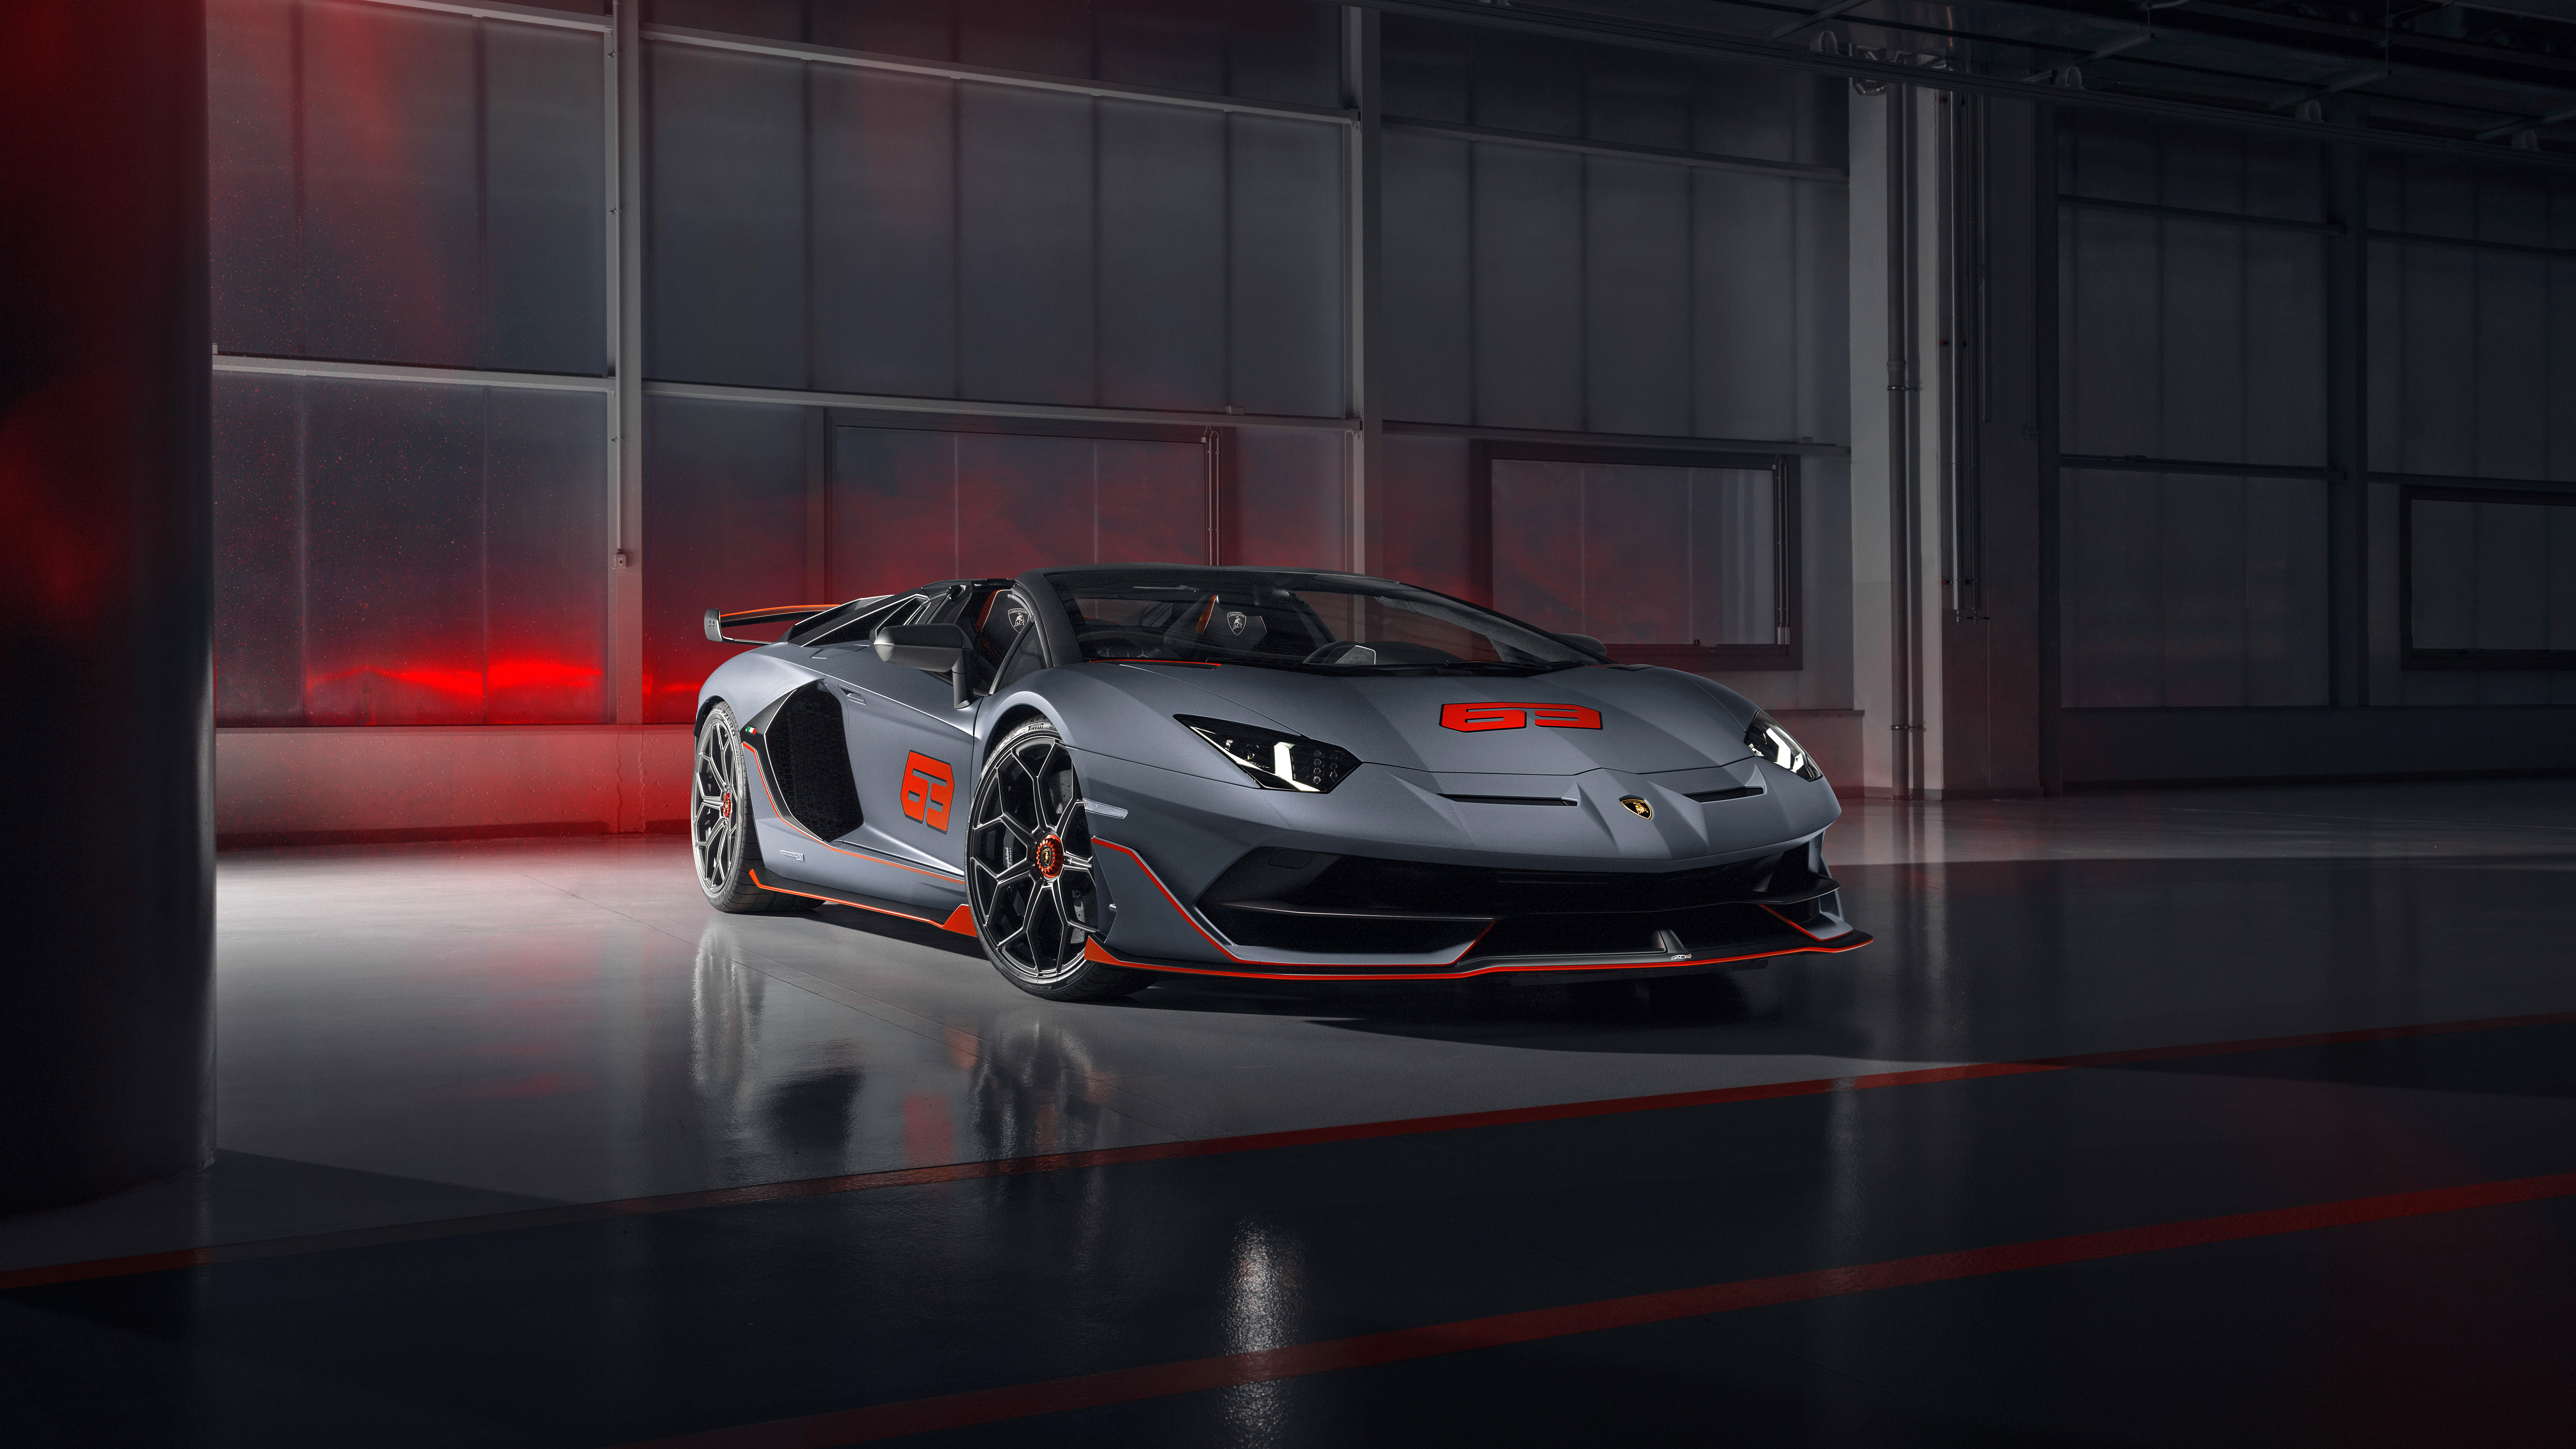 Télécharger des fonds d'écran Lamborghini Aventador Svj HD